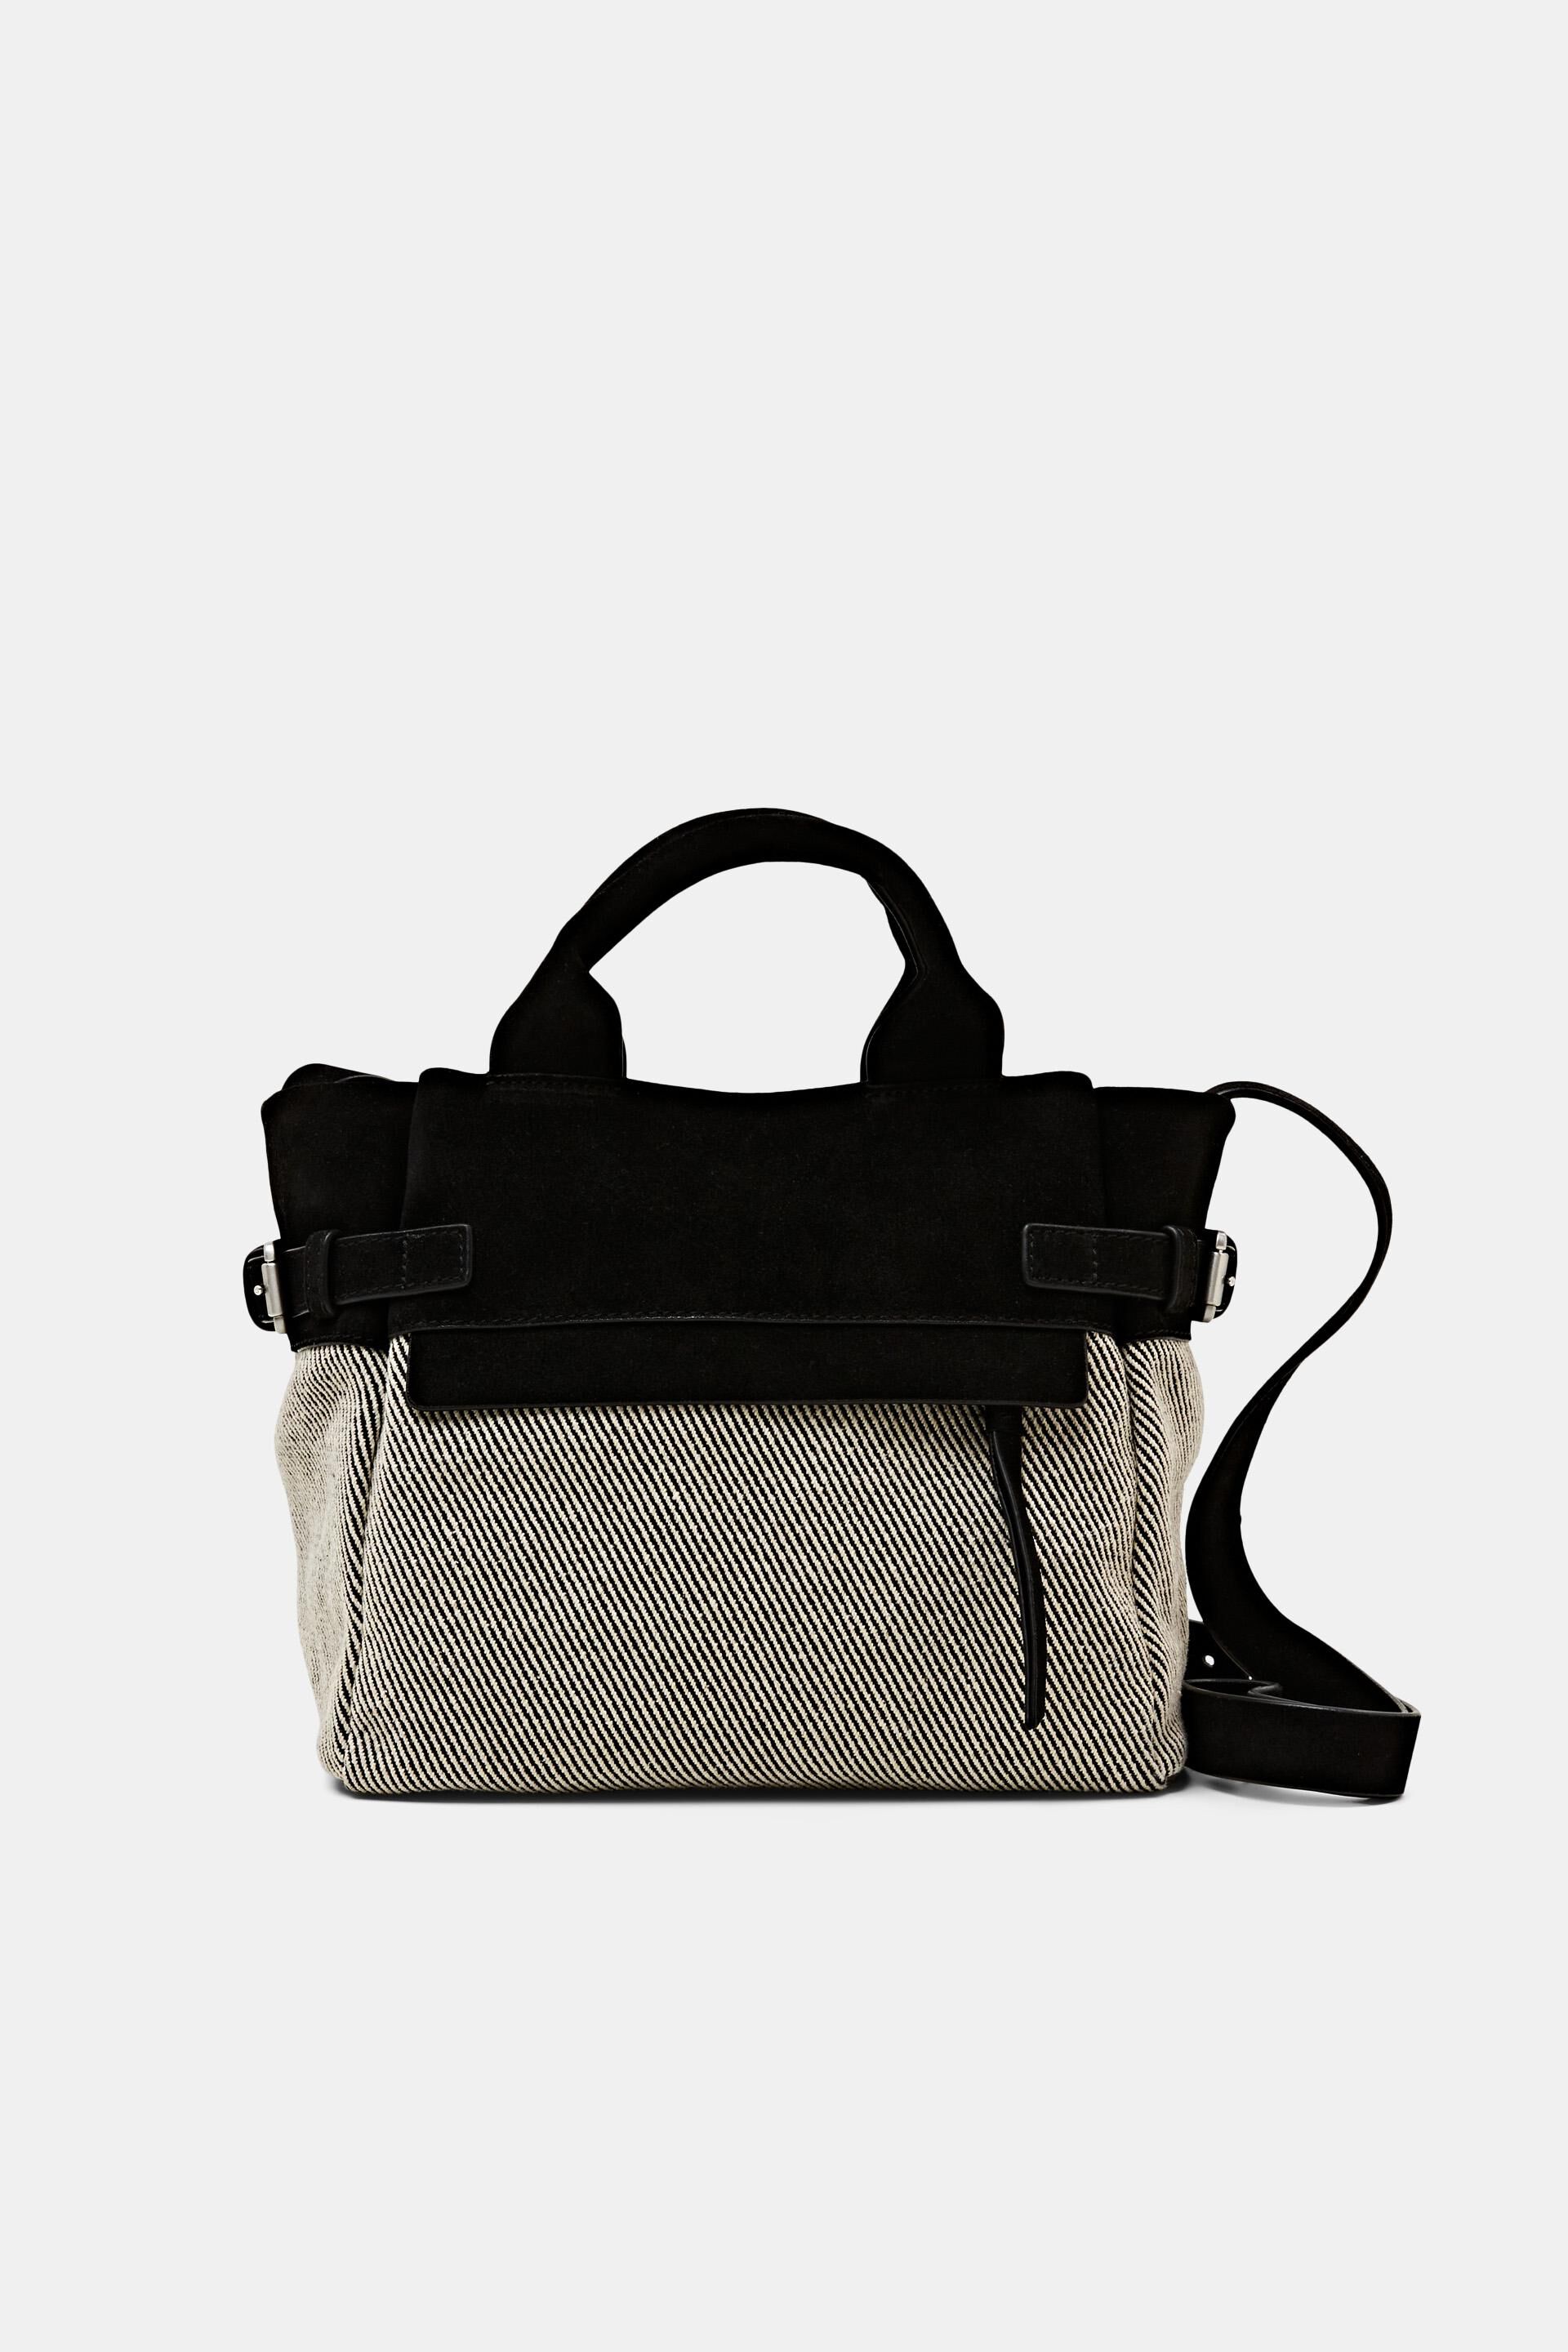 Esprit Online Store Cotton-Paneled Suede Top Handle Bag